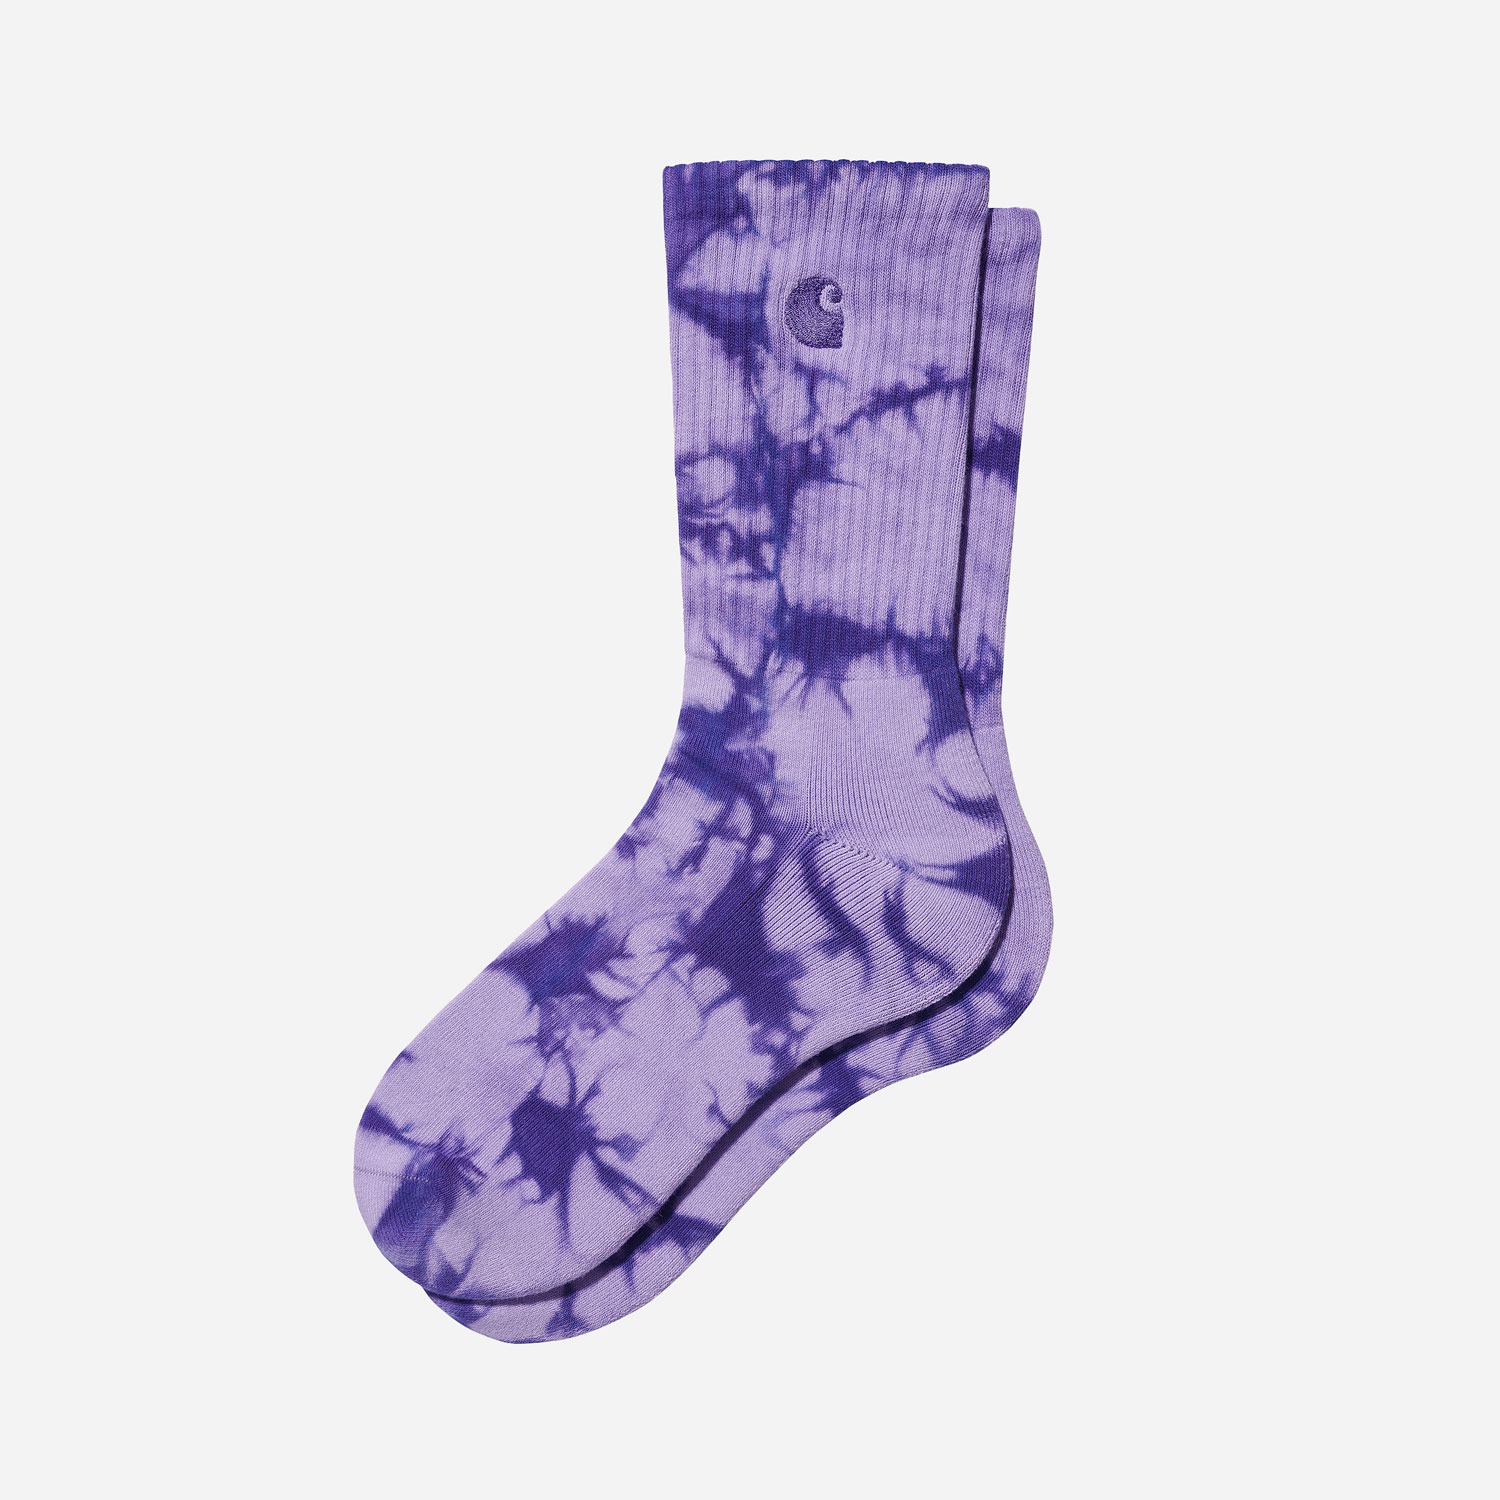 Carhartt Vista Sock - Razzmic/Soft Lavender